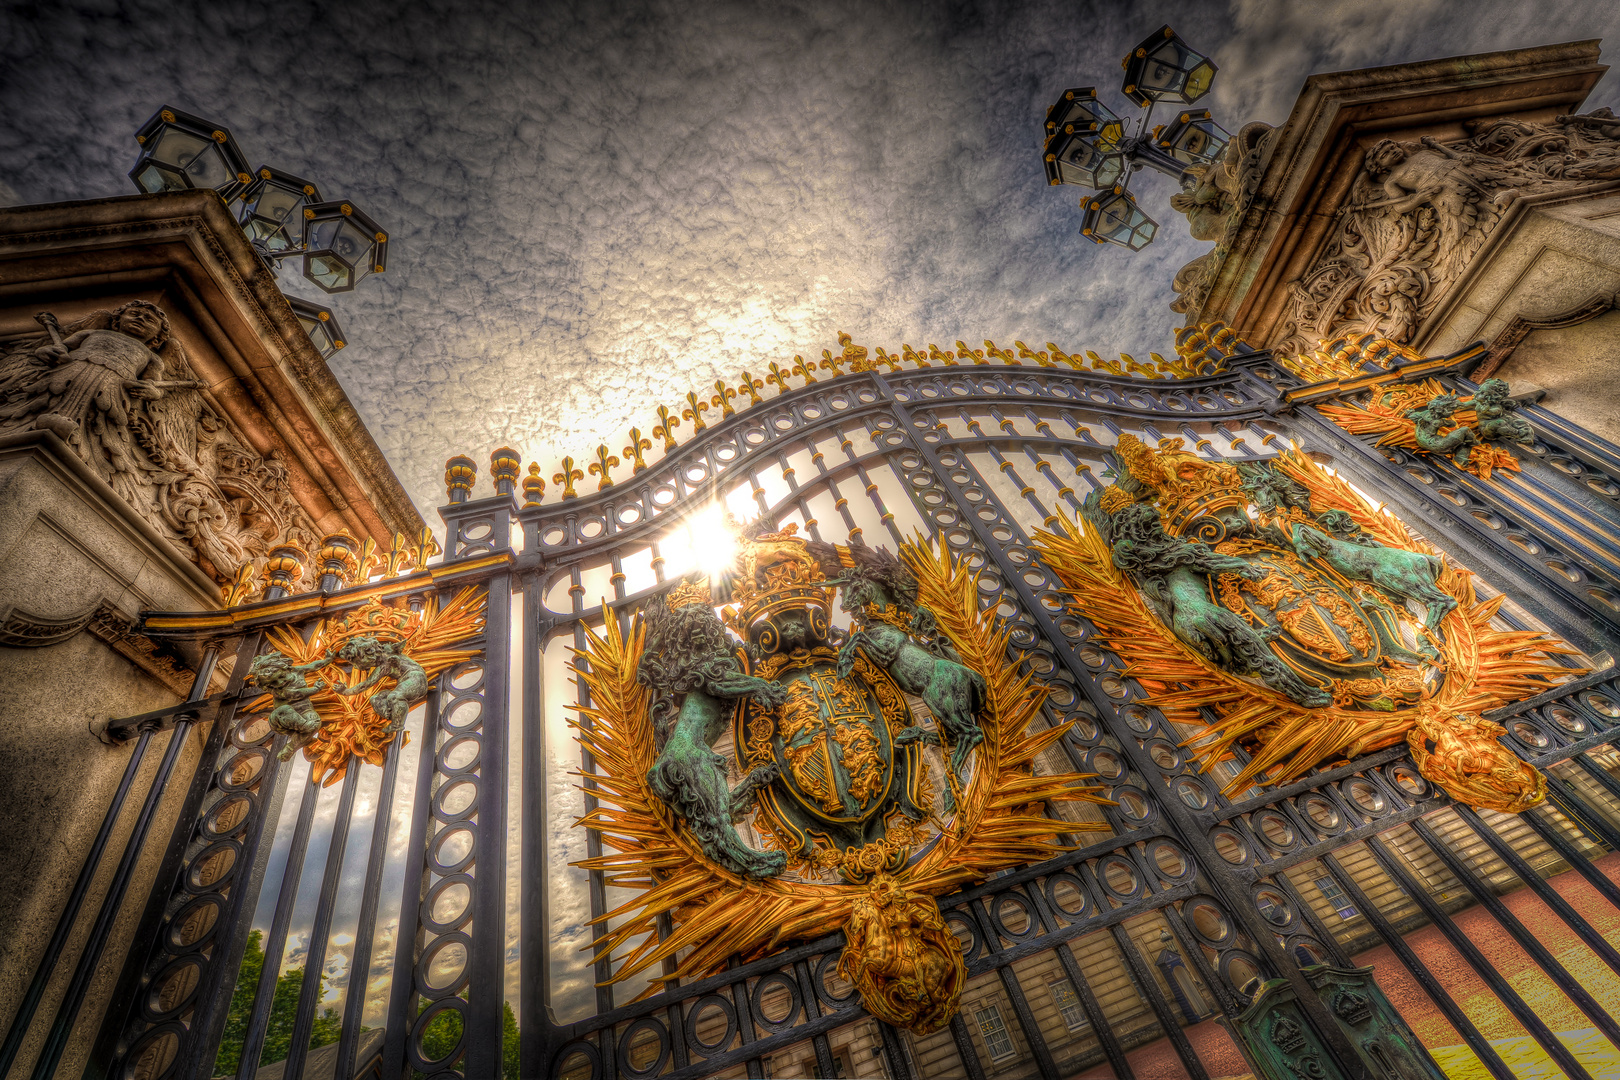 The doors of Buckingham Palace